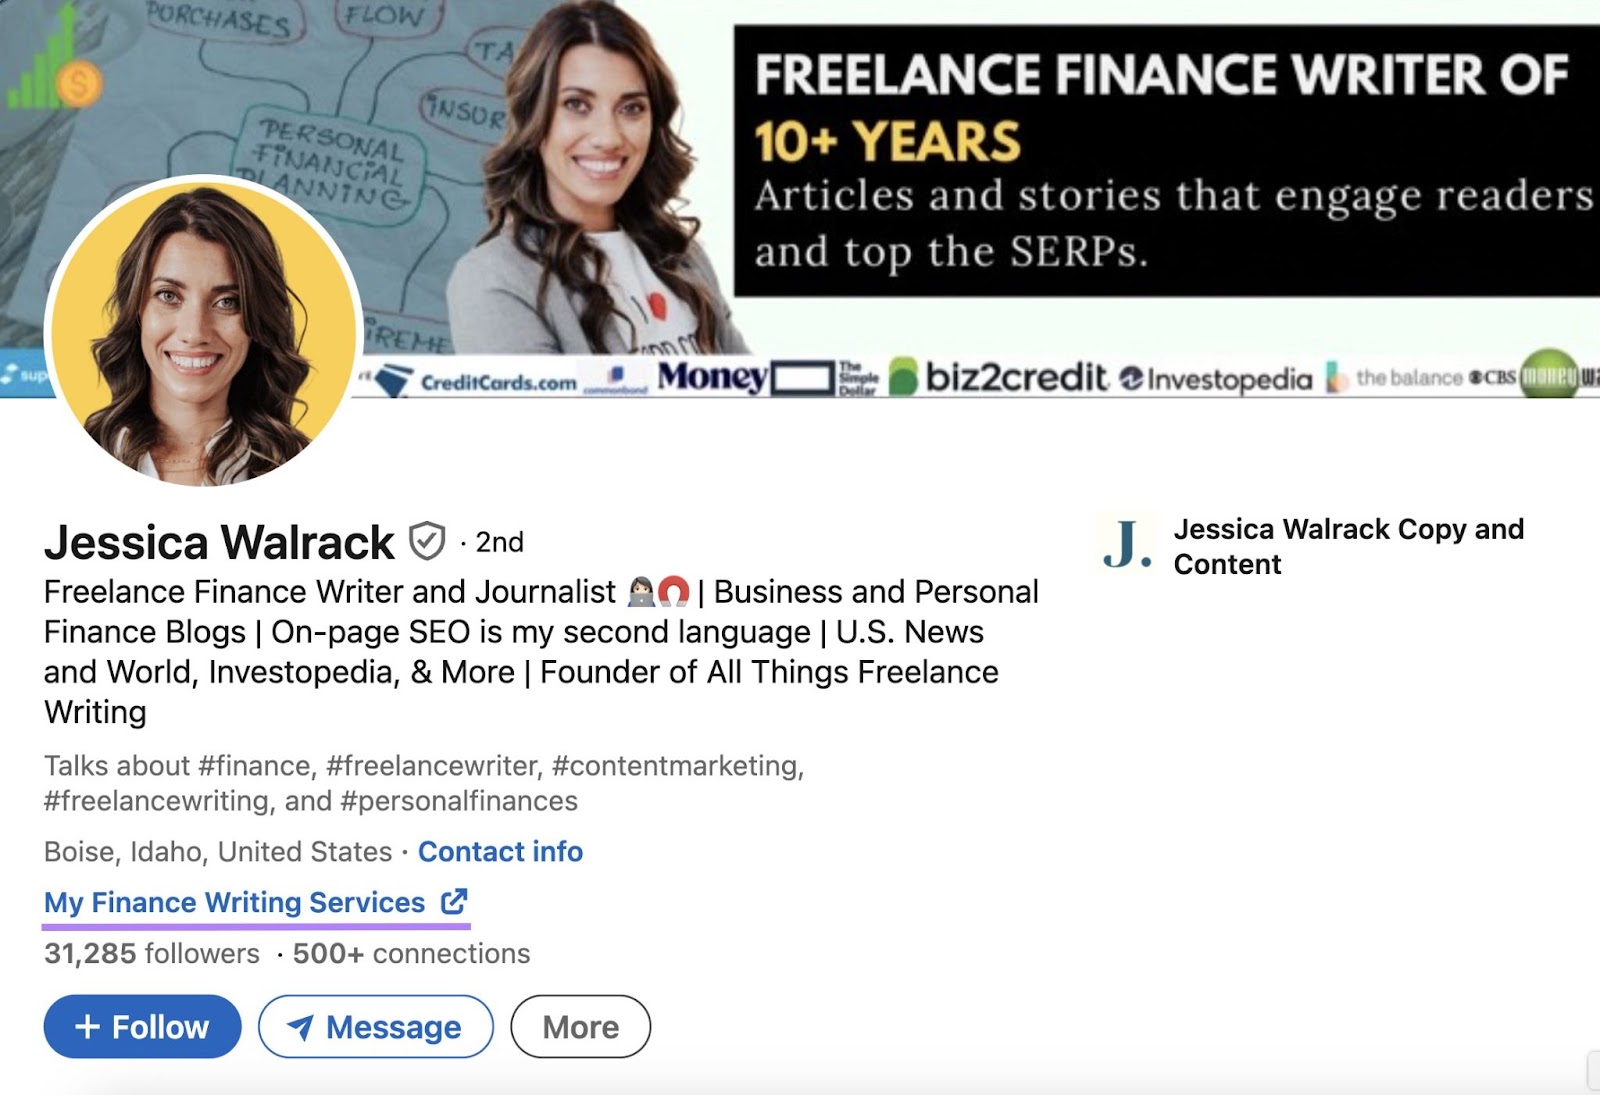 "My Finance Writing Services" custom button on Jessica Walrack's LinkedIn profile